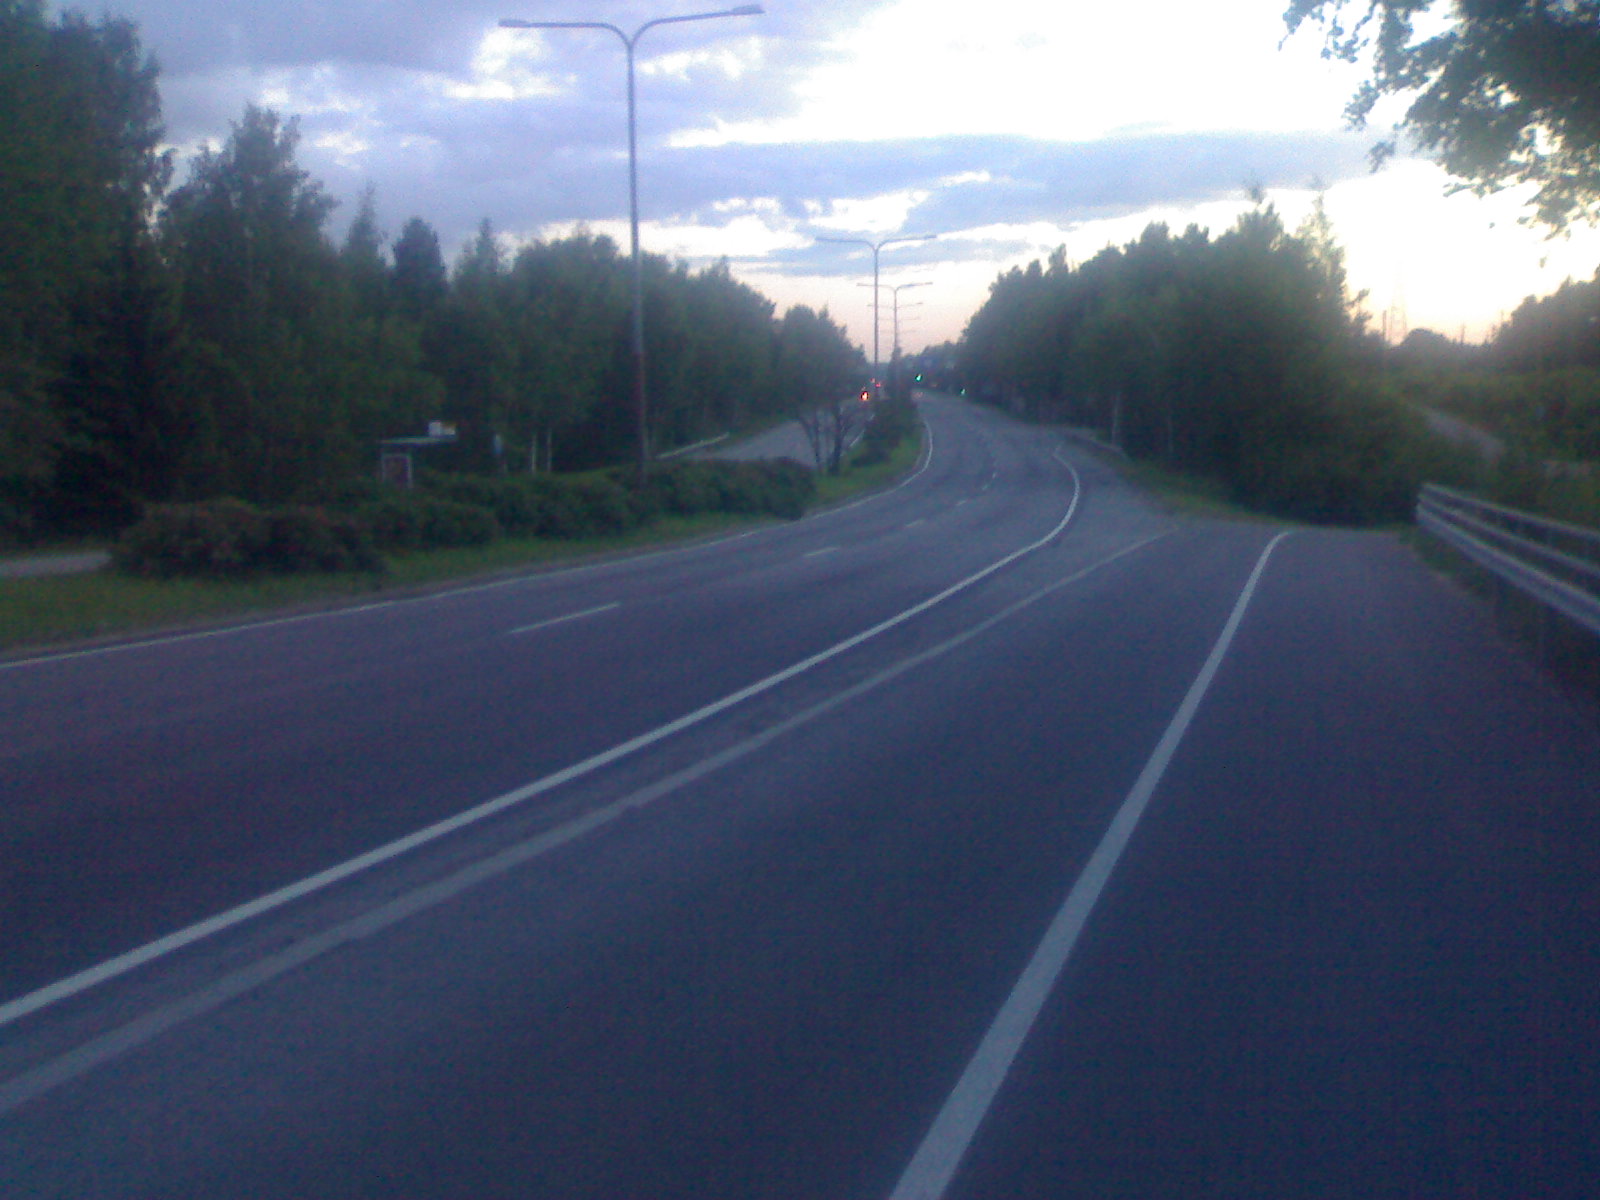 I walk alone road...